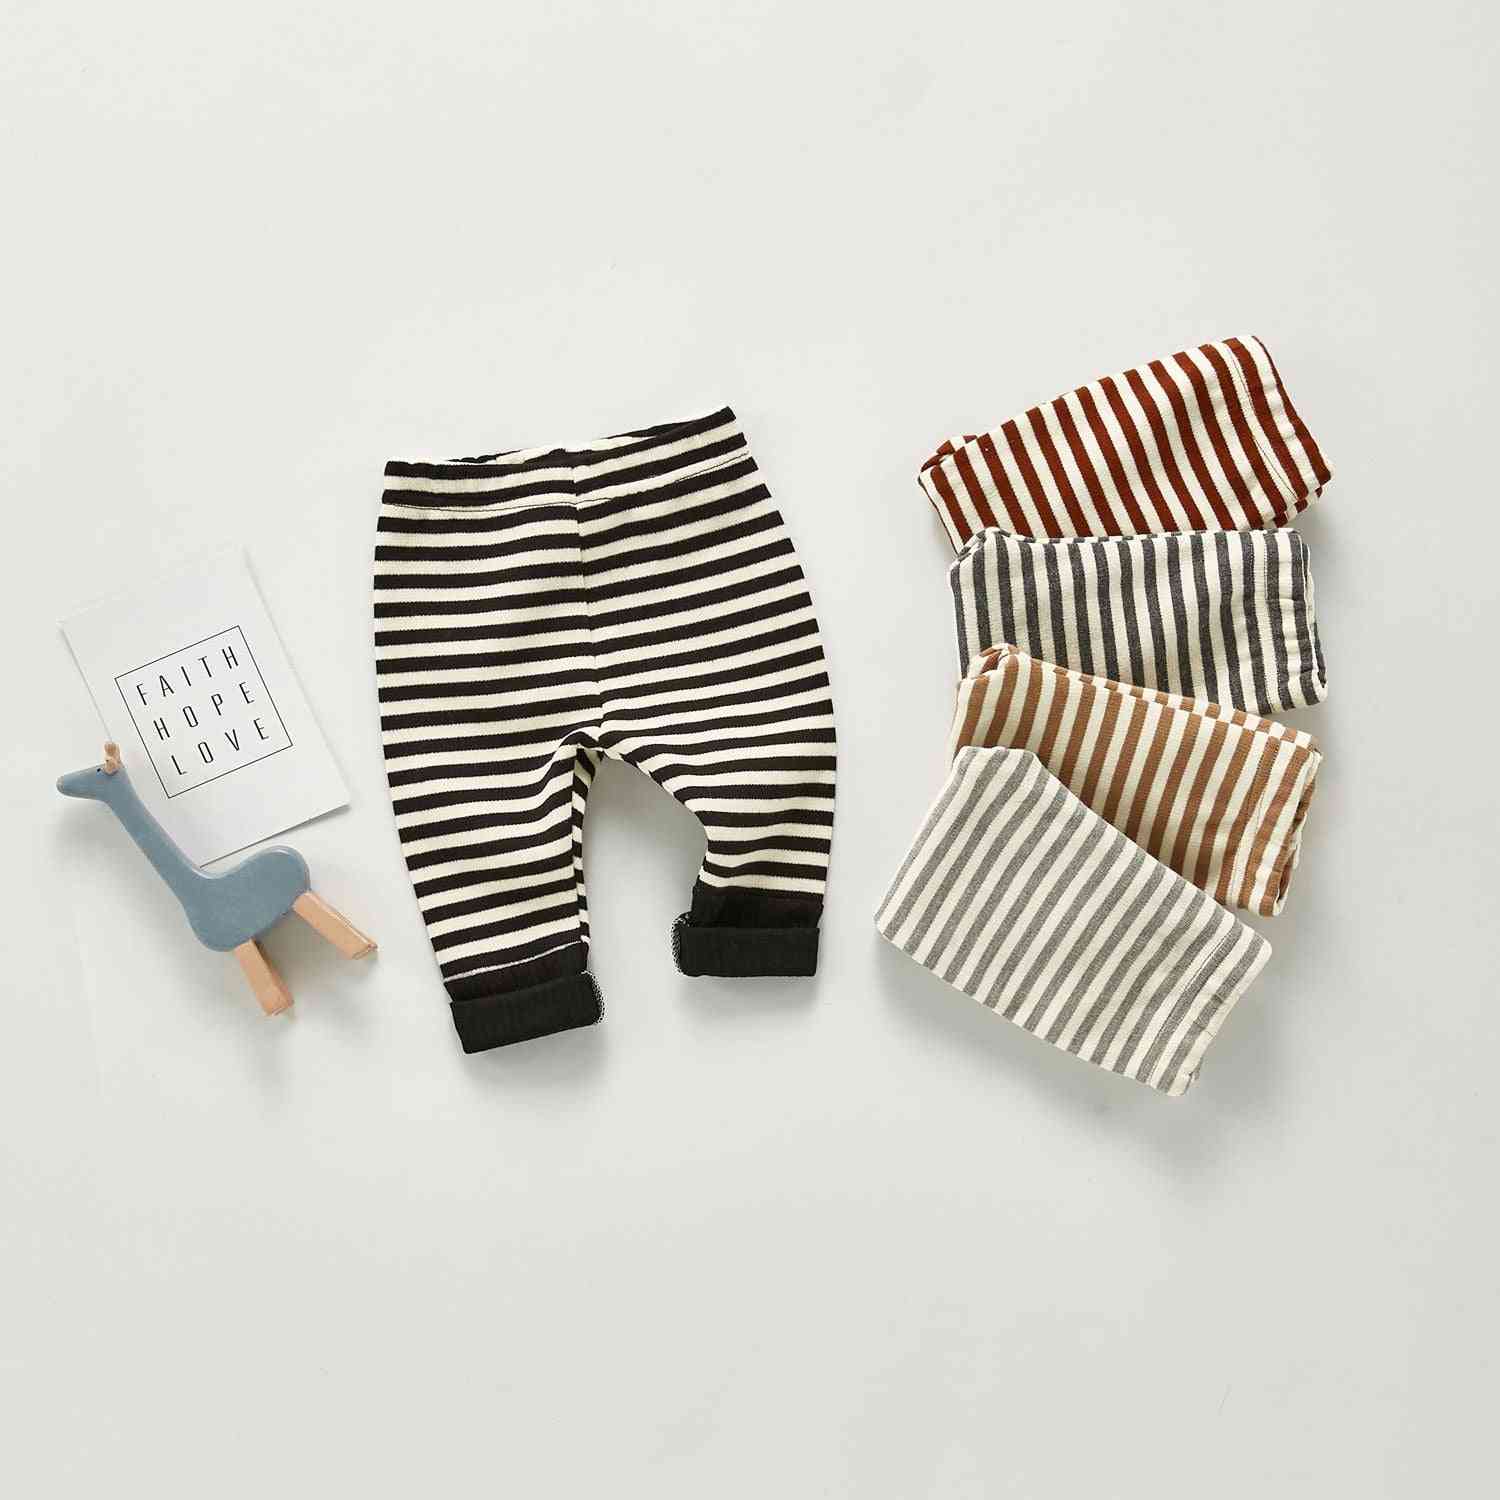 Pantalones de algodón para niños pequeños / niños pantalones de polainas pp